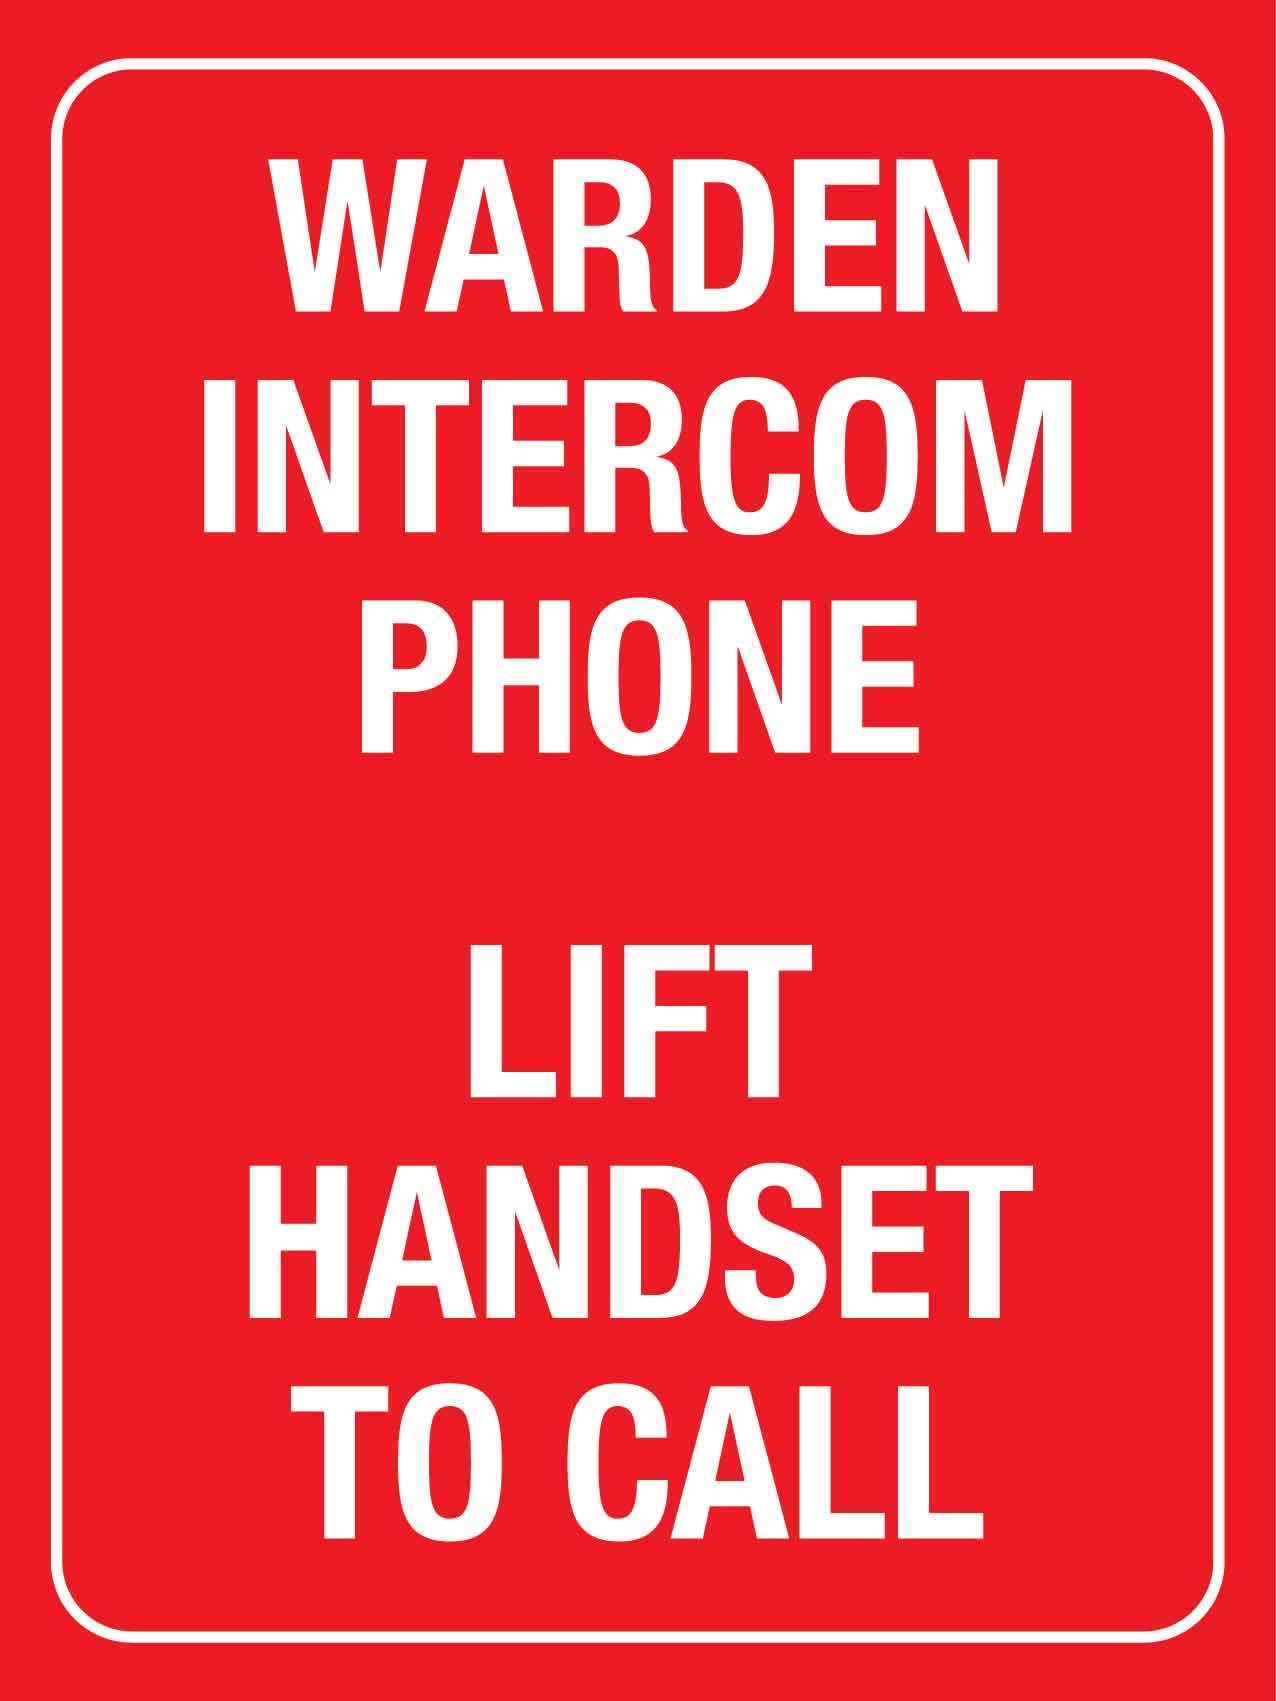 Warden Intercom Phone Lift Handset To Call Sign